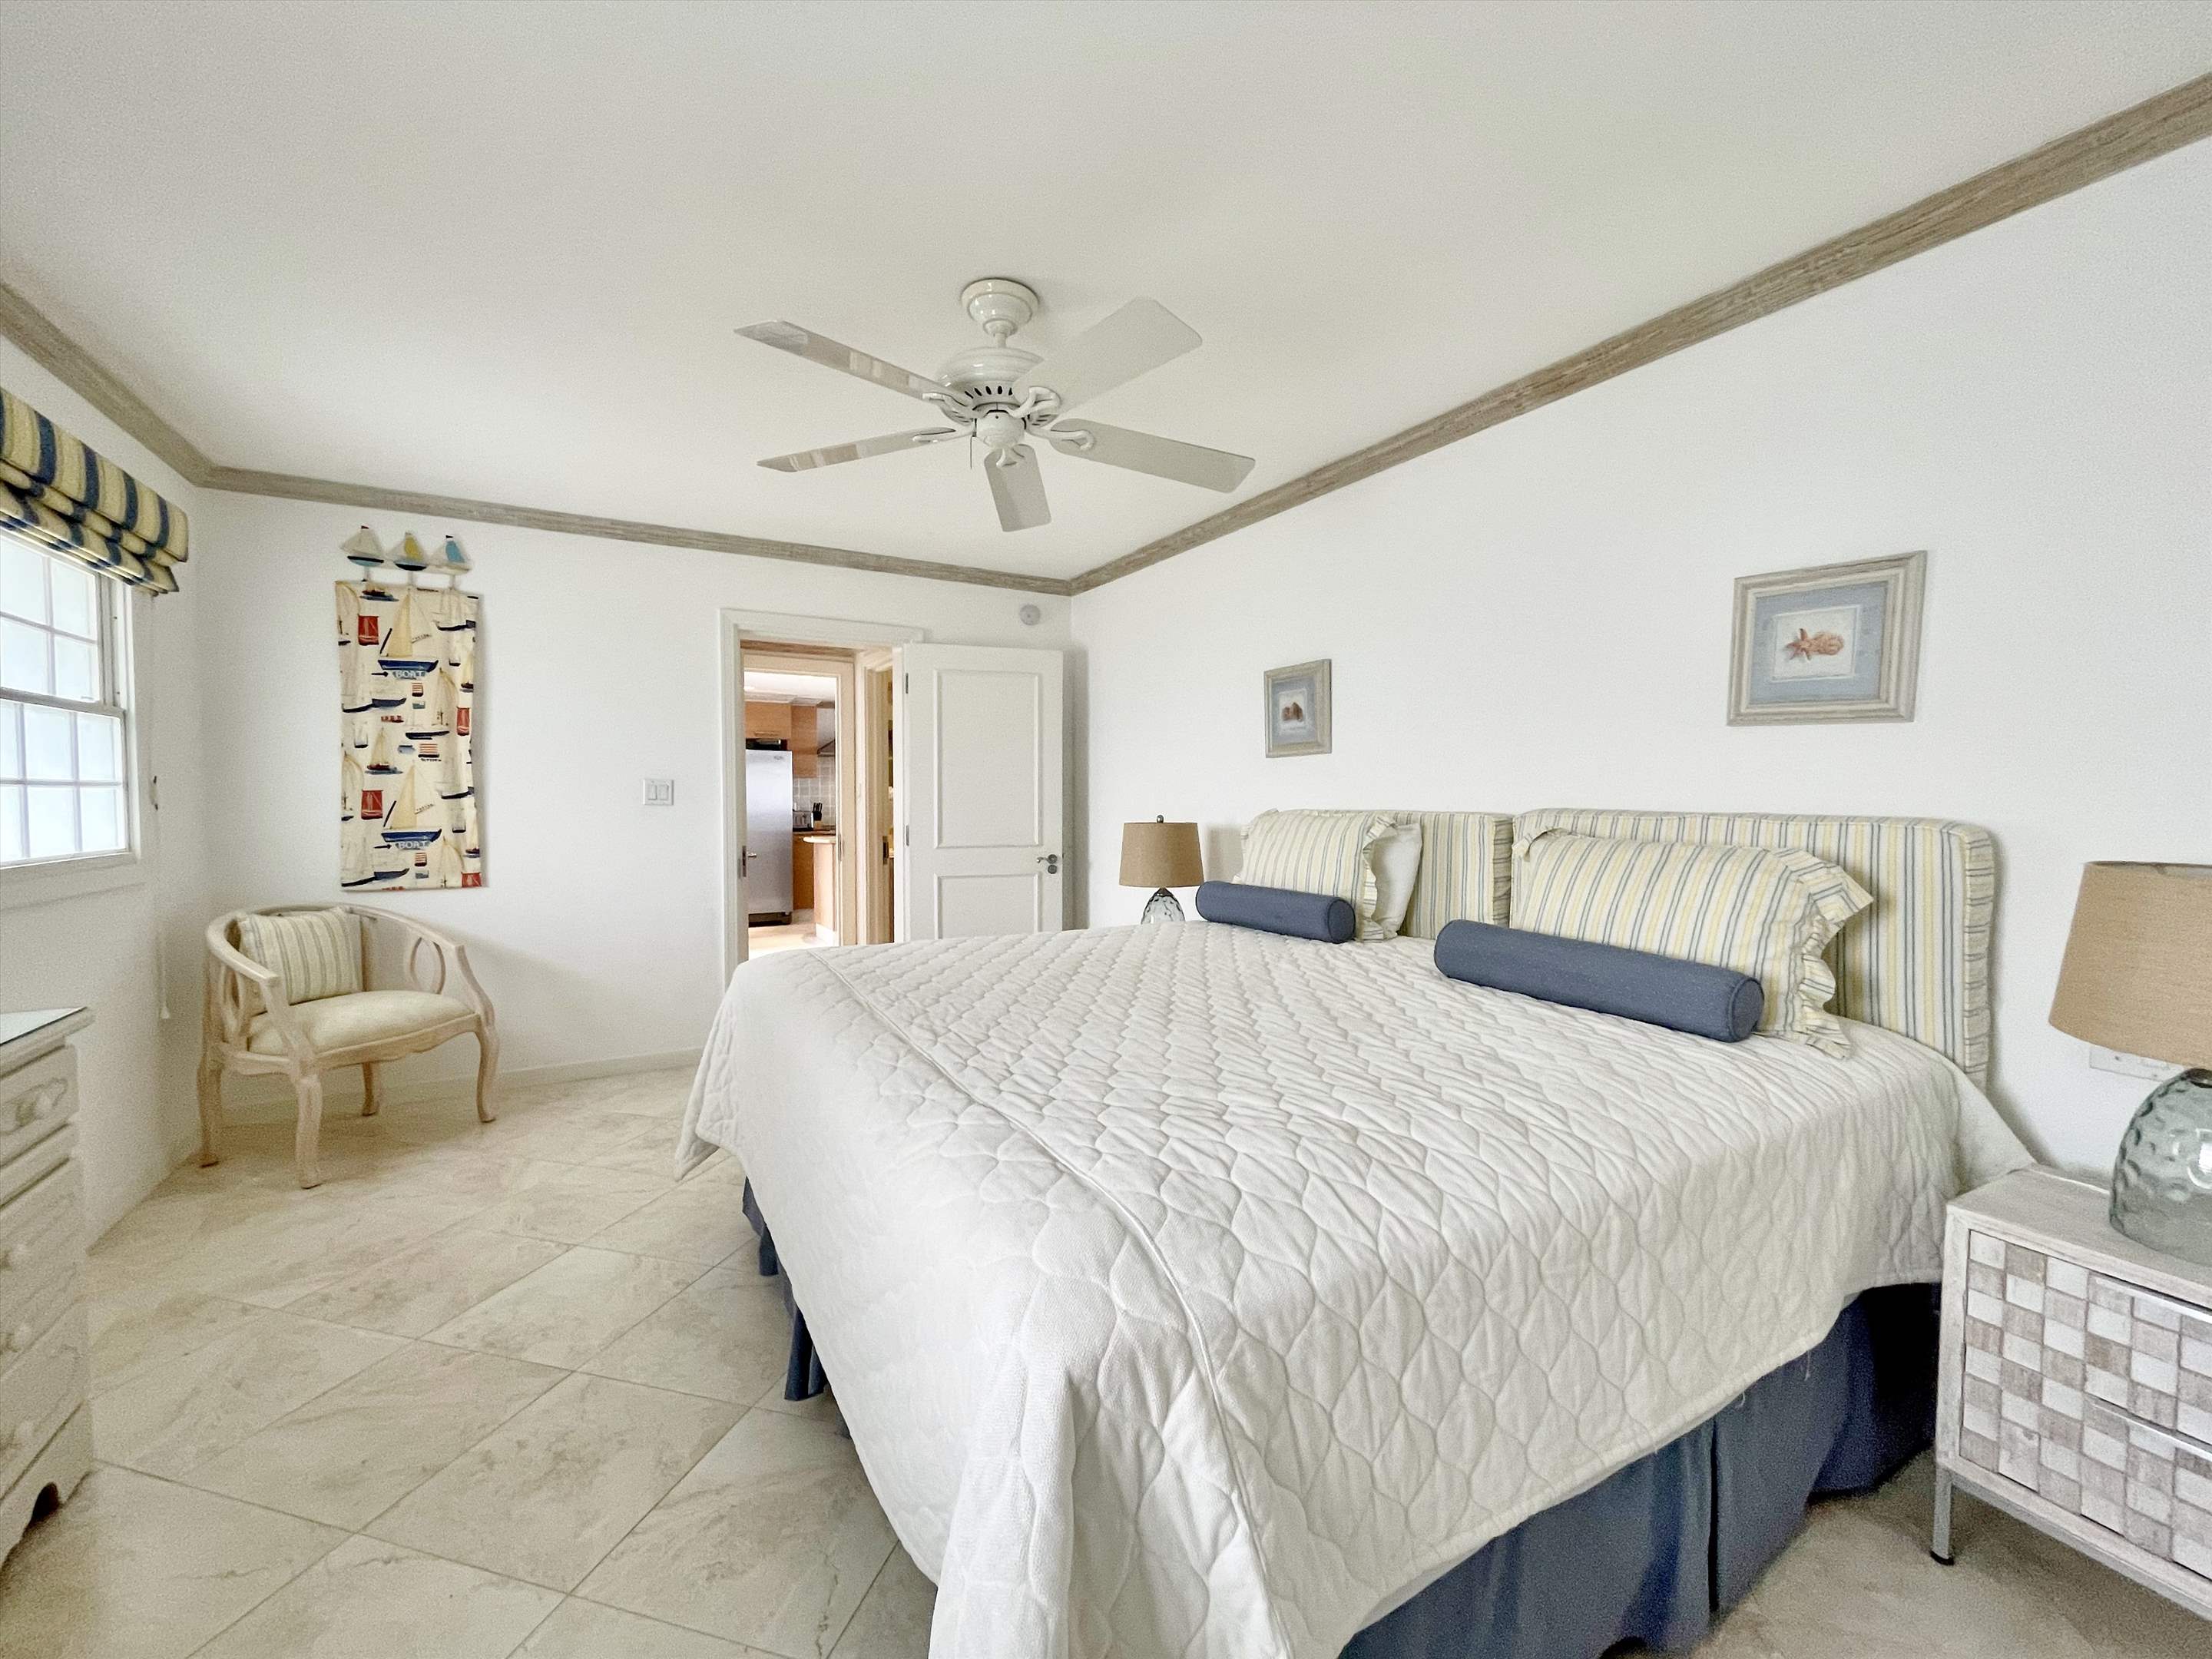 Villas on the Beach 403, 3 bedroom, 3 bedroom apartment in St. James & West Coast, Barbados Photo #14